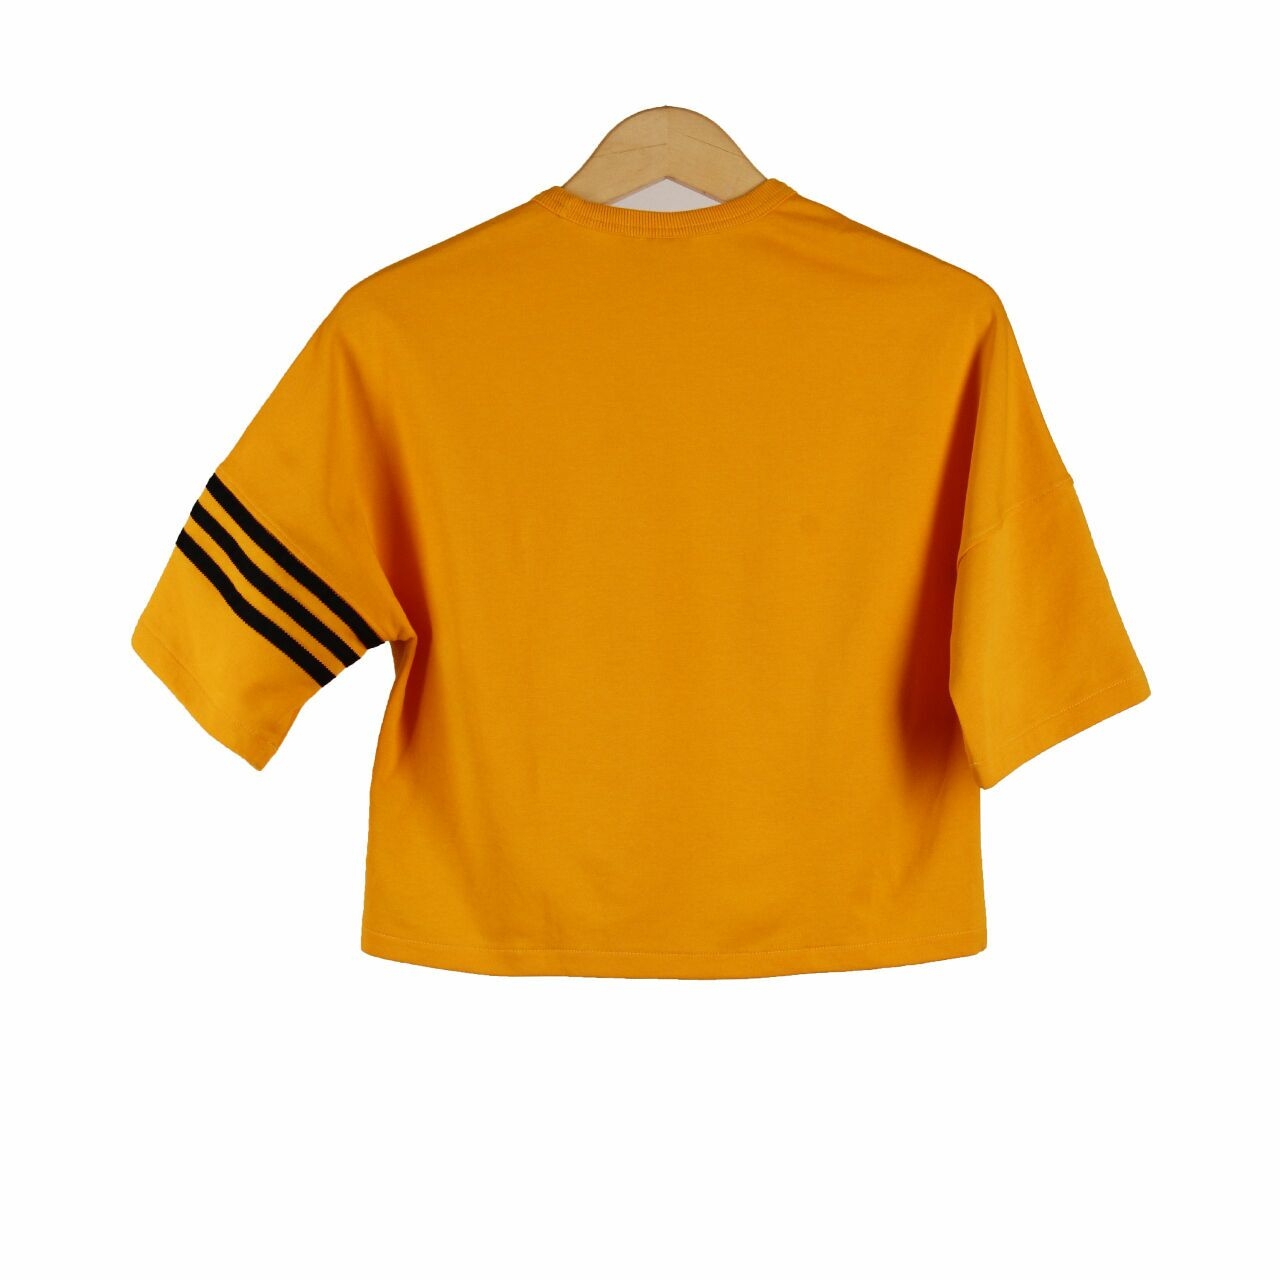 Adidas Yellow T-Shirt